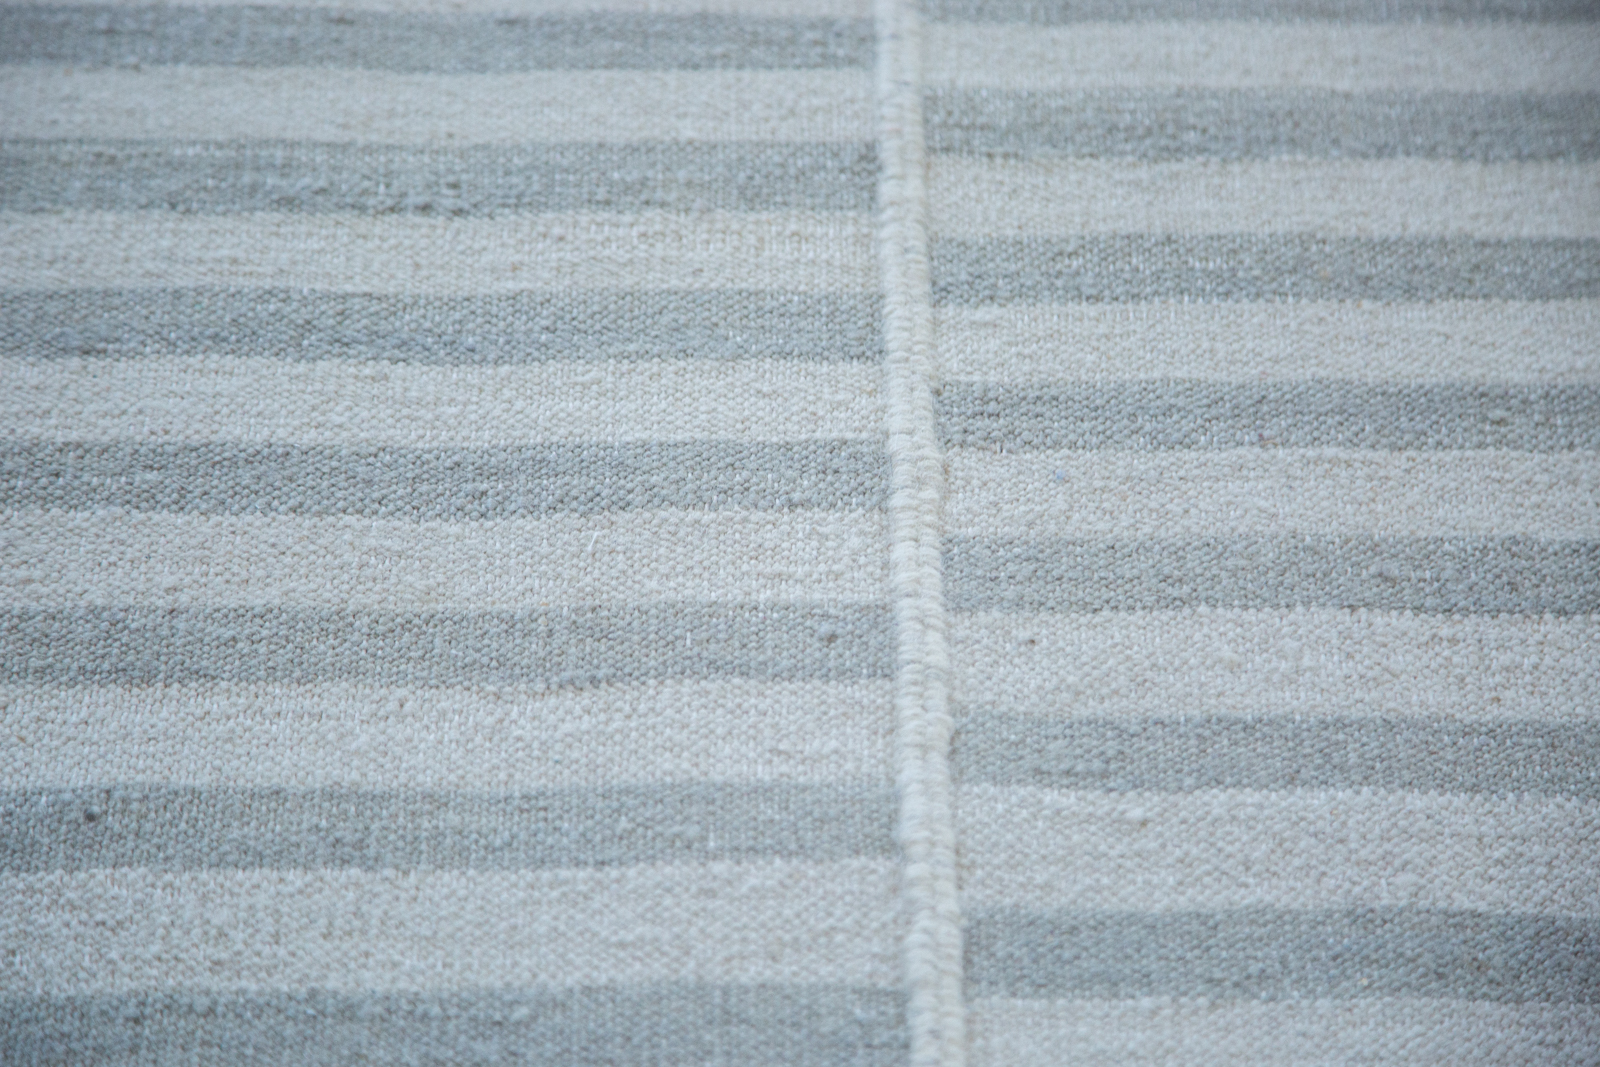 Striped Kilim Carpet